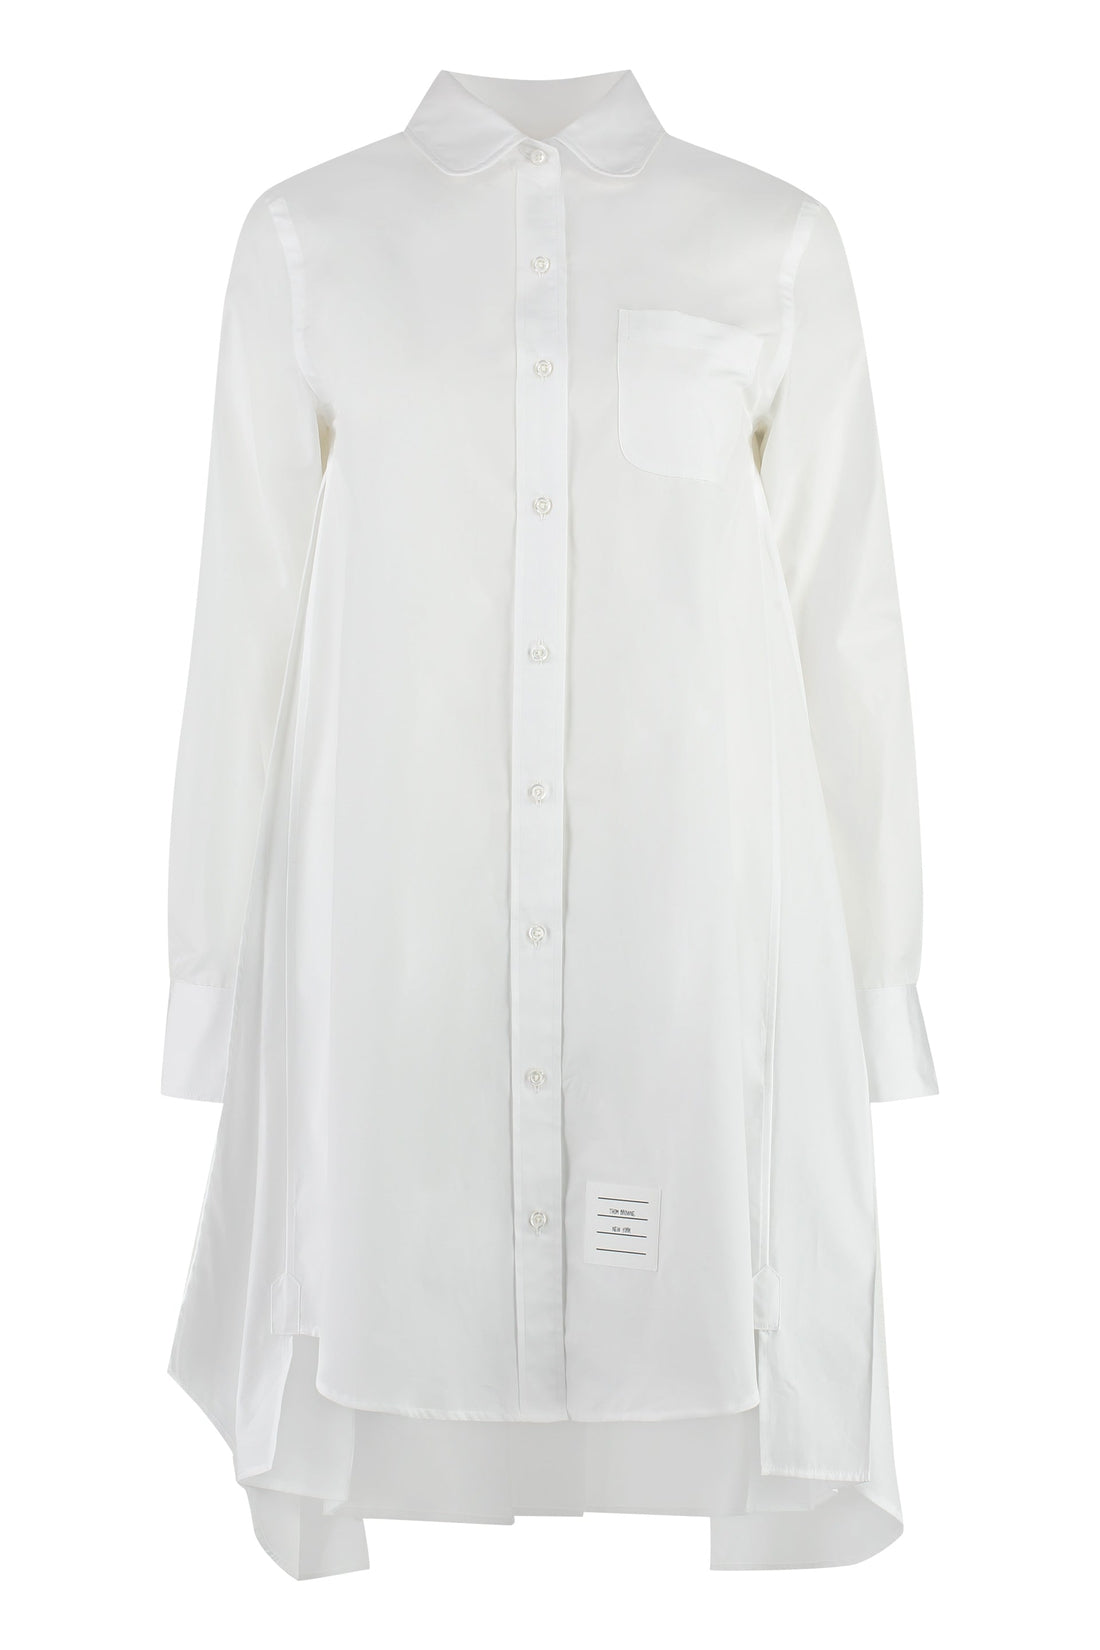 Thom Browne-OUTLET-SALE-Cotton shirtdress-ARCHIVIST